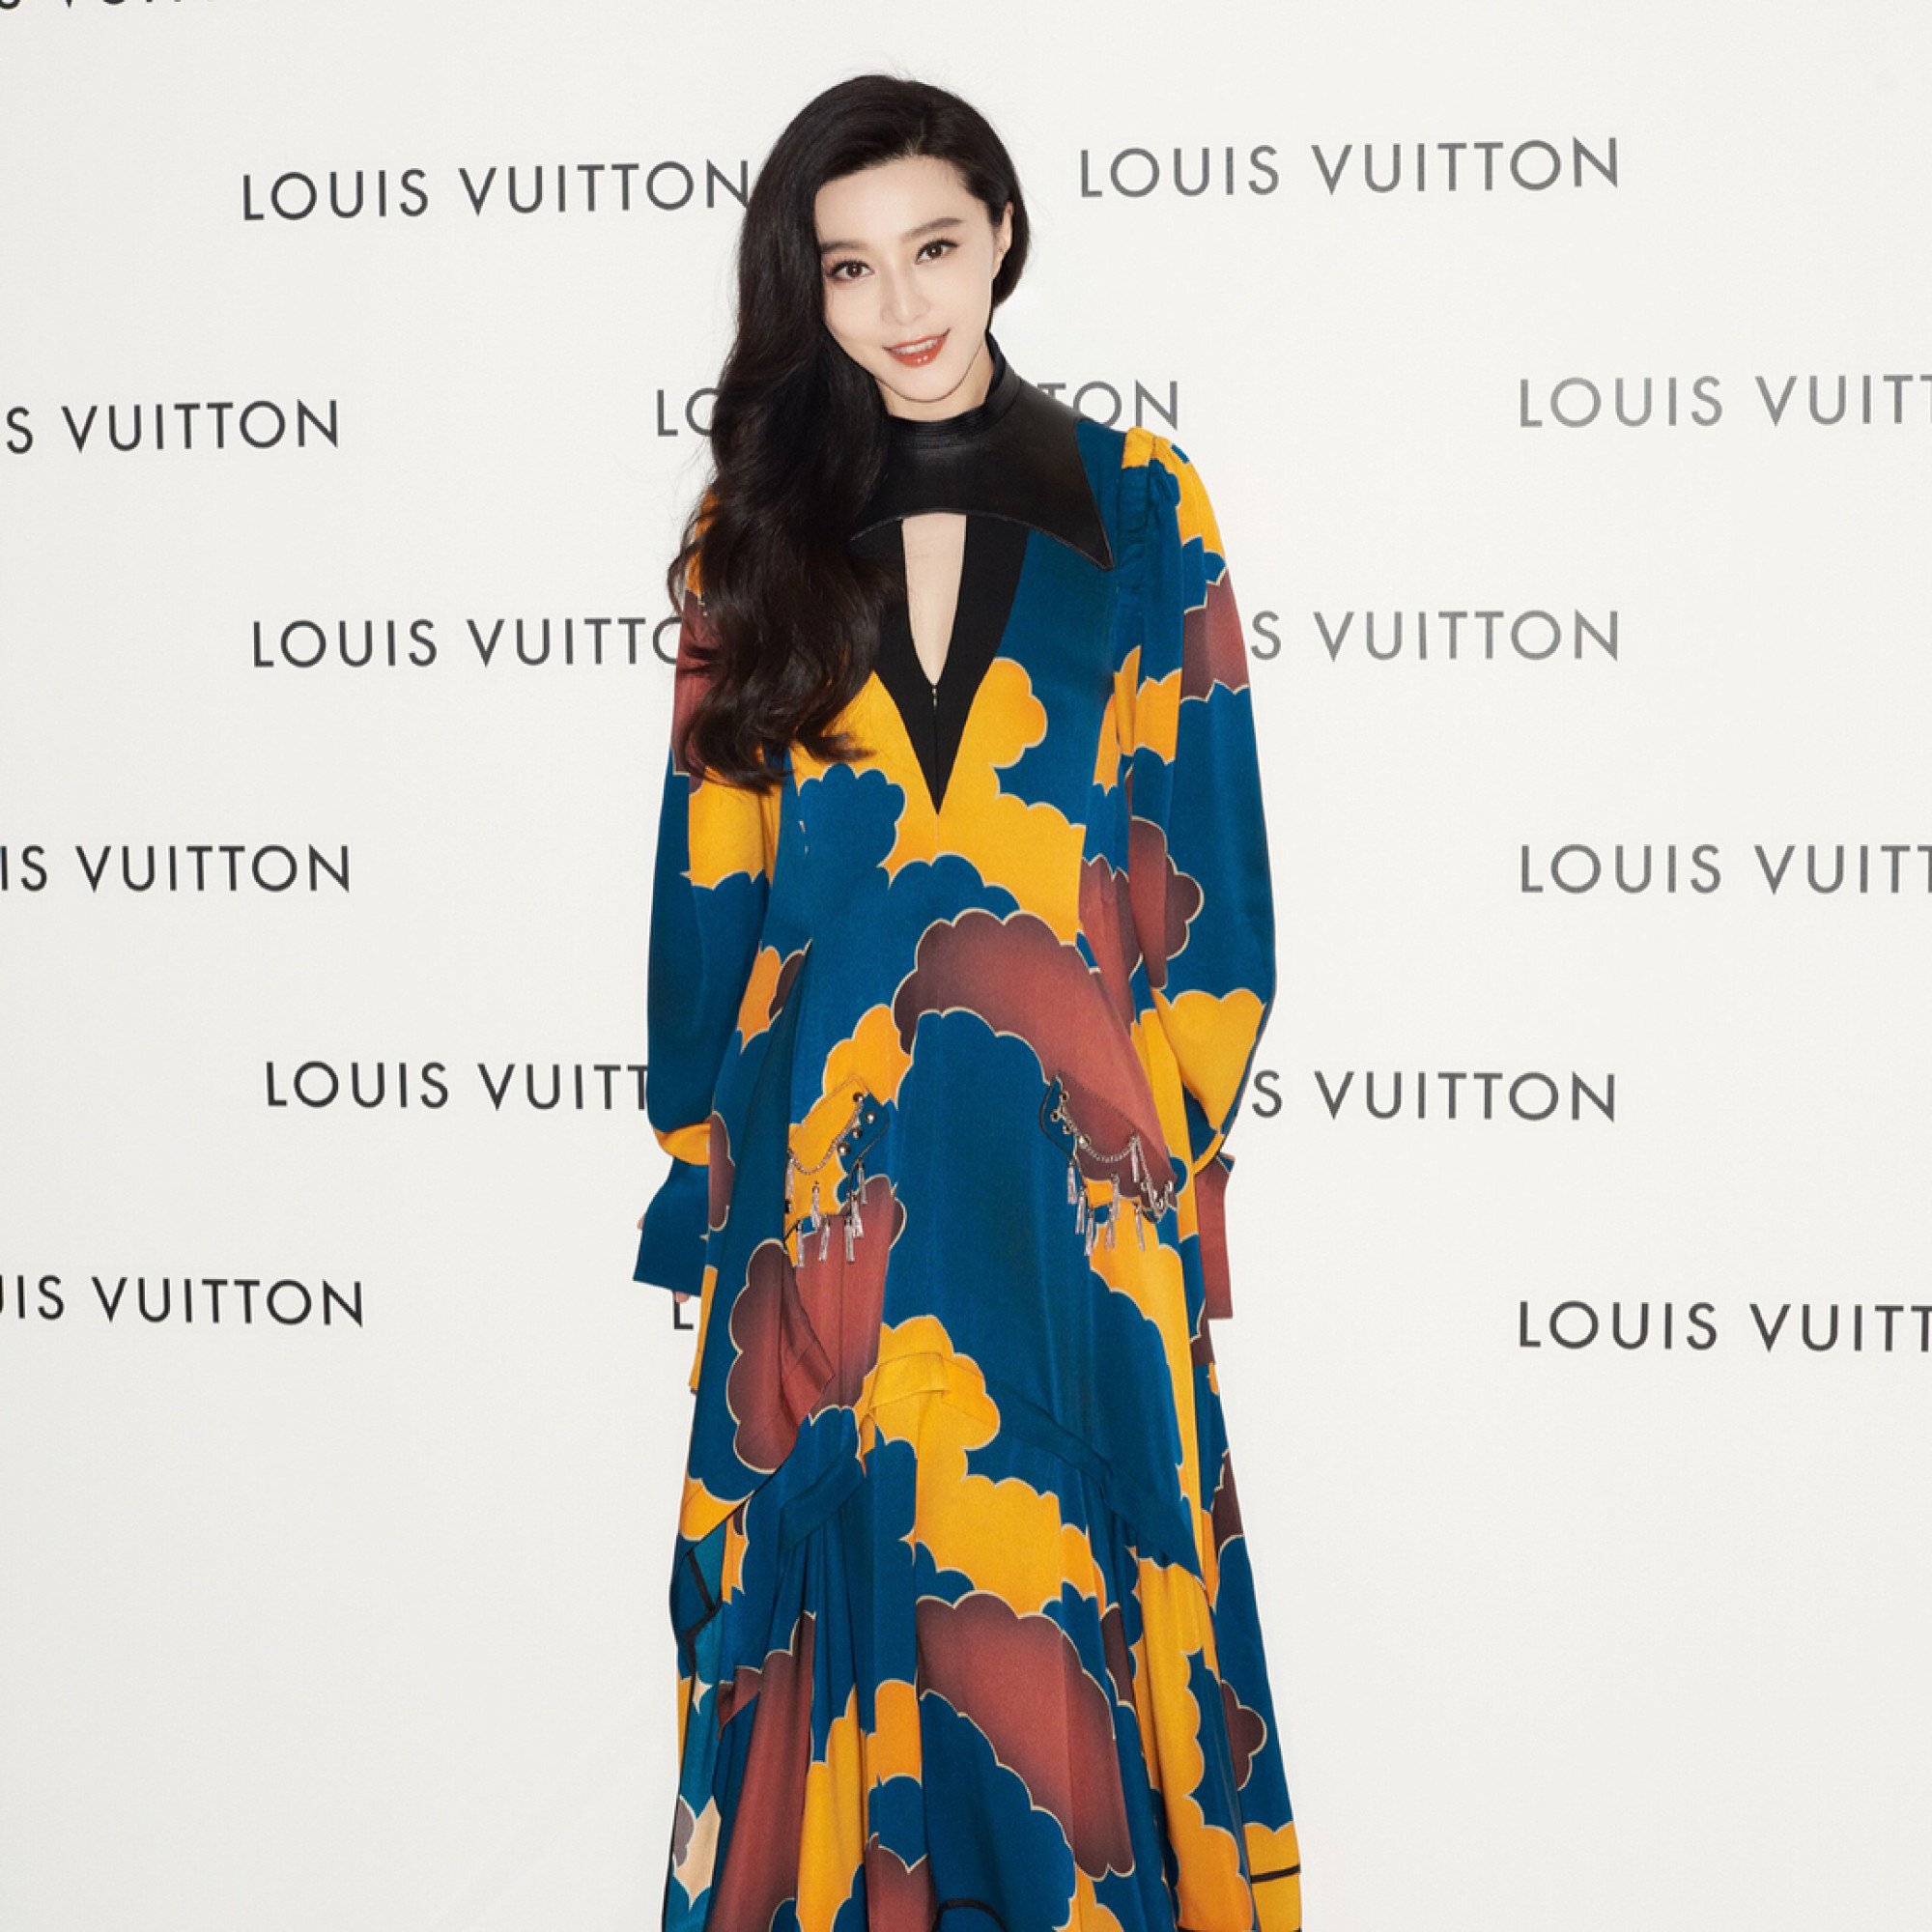 Fan Bingbing in Louis Vuitton  Fashion, Star fashion, Checkered dress